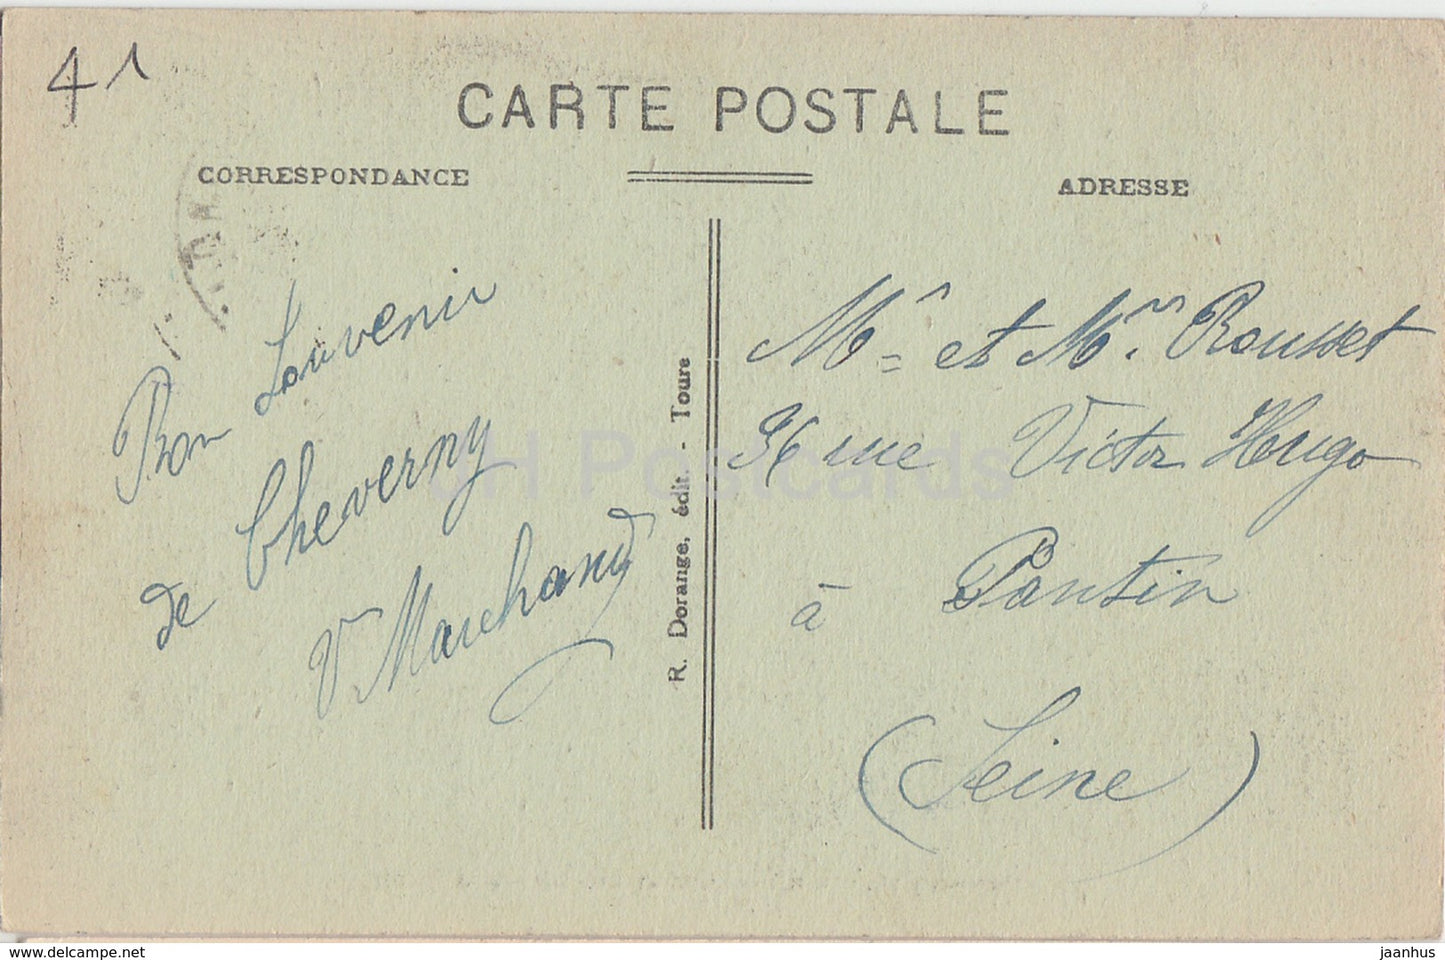 Cheverny - Le Chateau - Le Grand Salon - 7 - Schloss - alte Postkarte - Frankreich - gebraucht